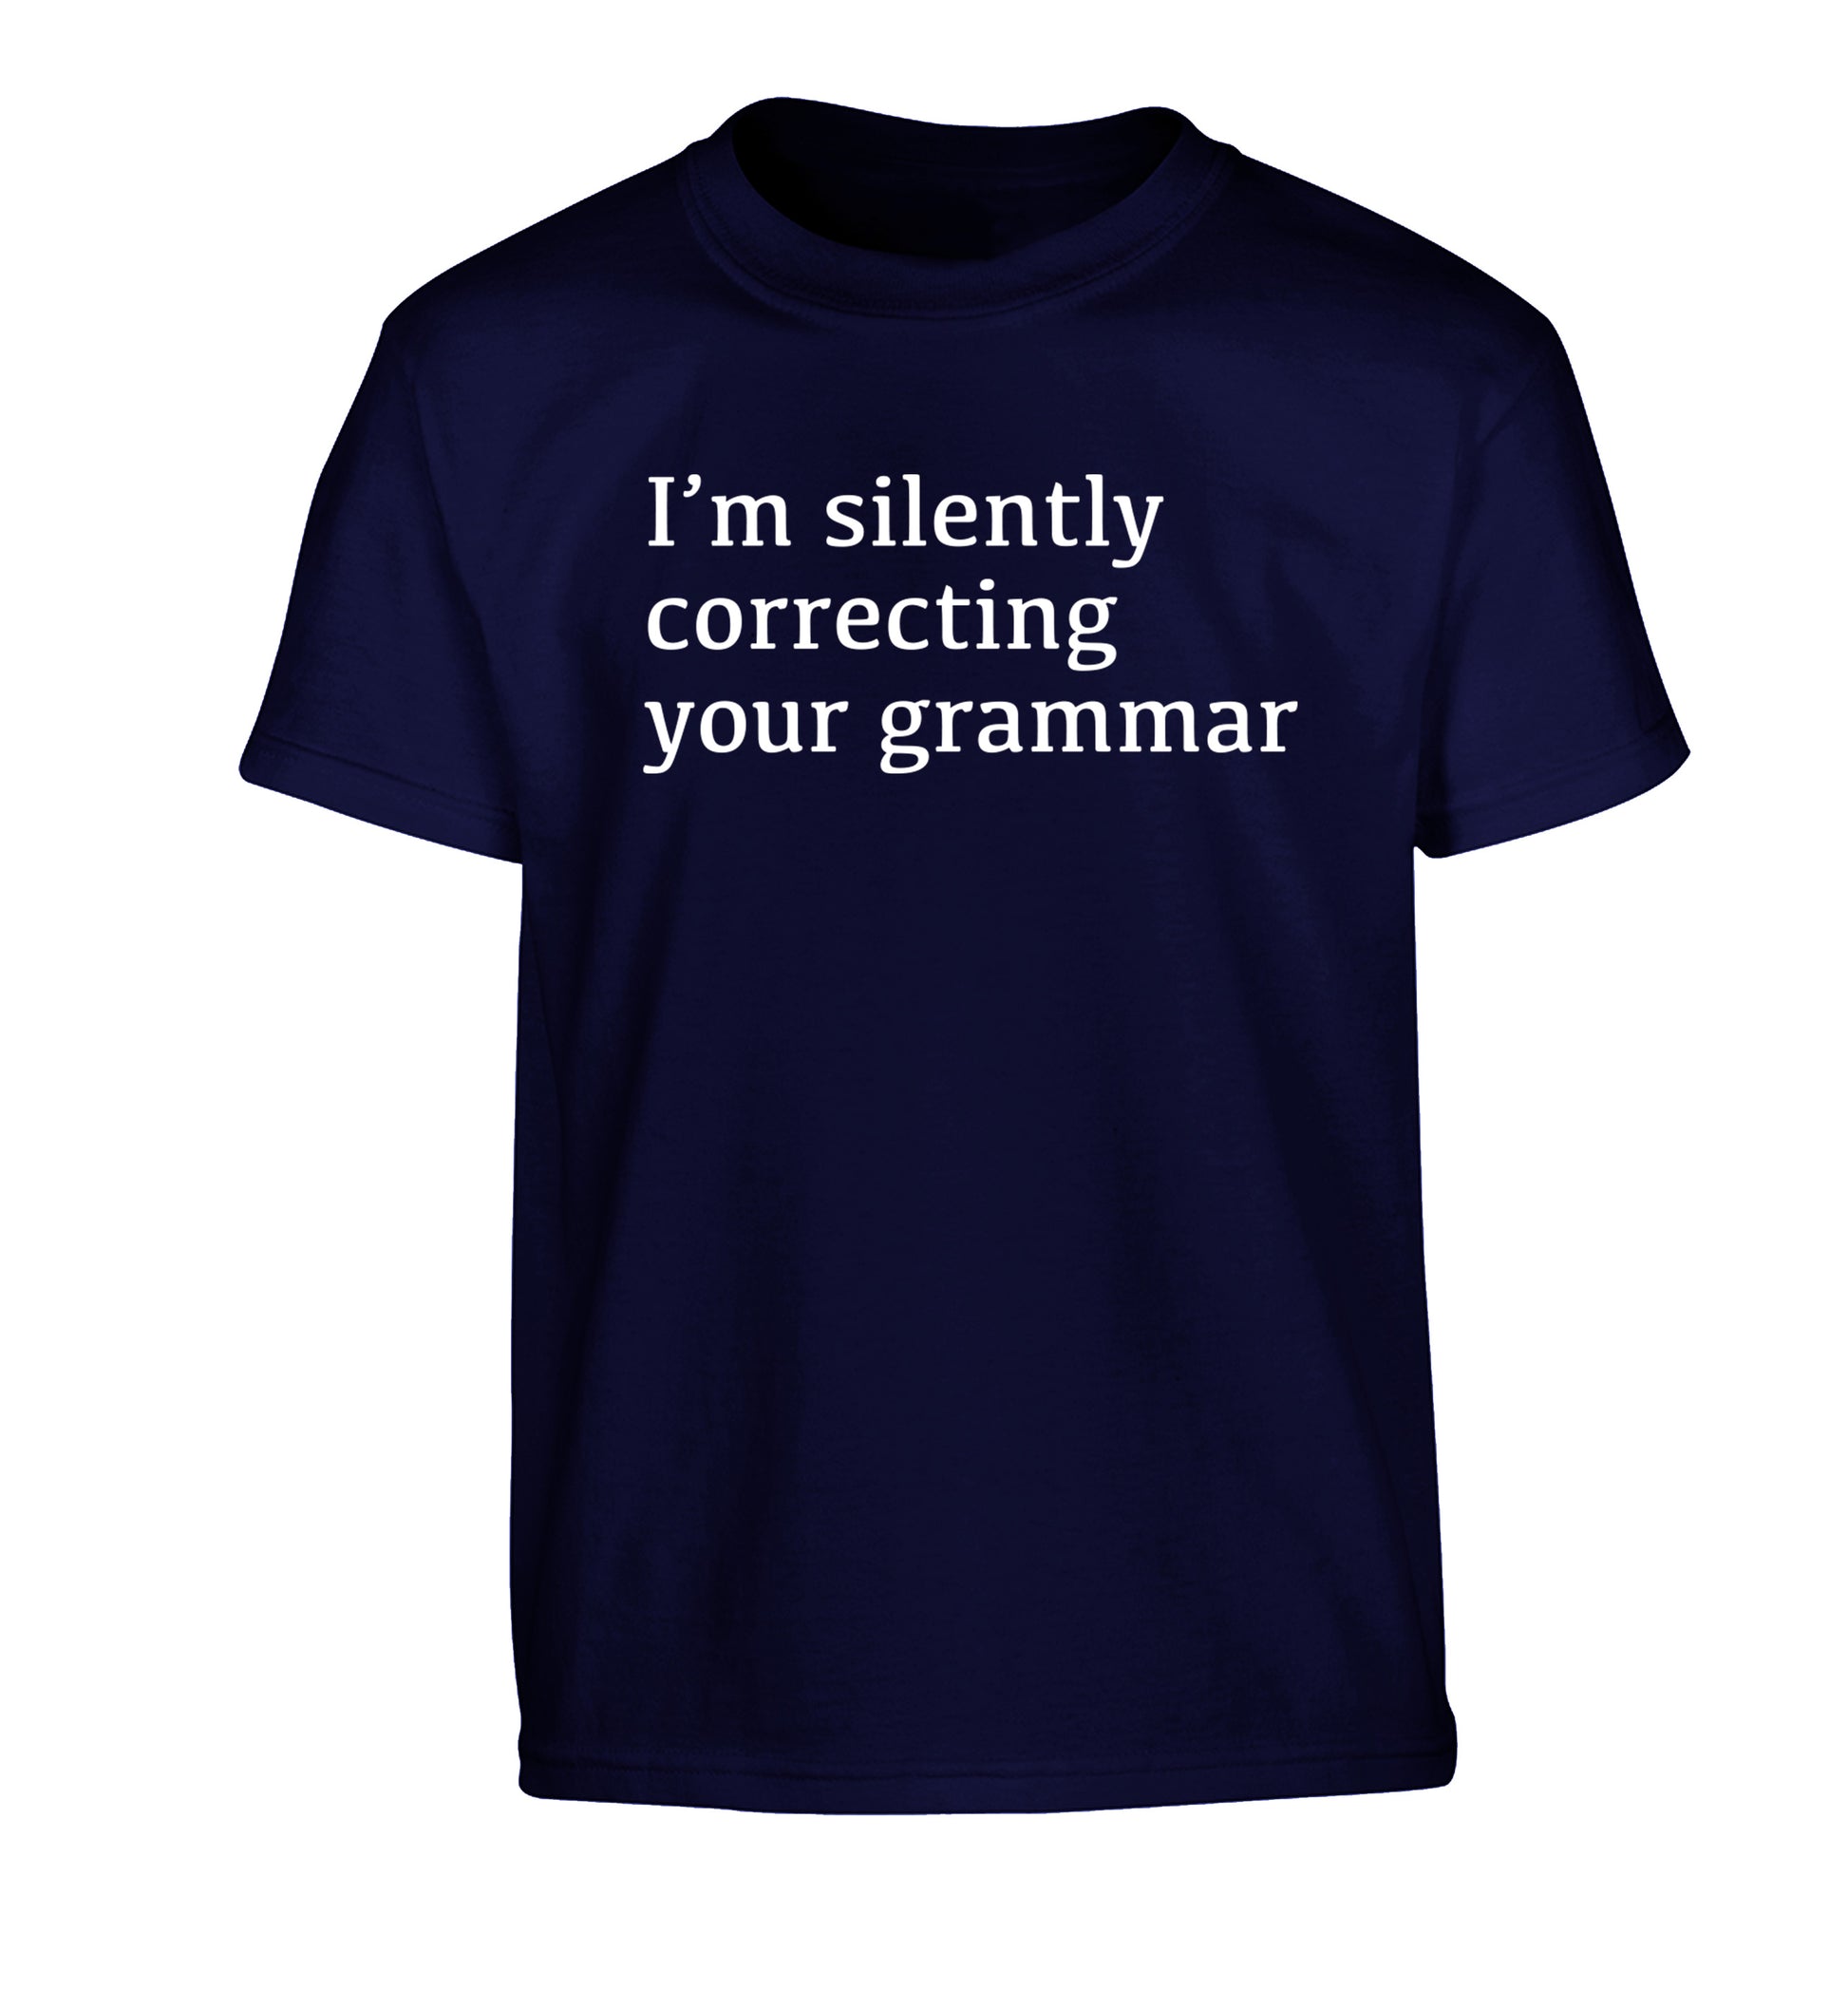 I'm silently correcting your grammar  Children's navy Tshirt 12-14 Years